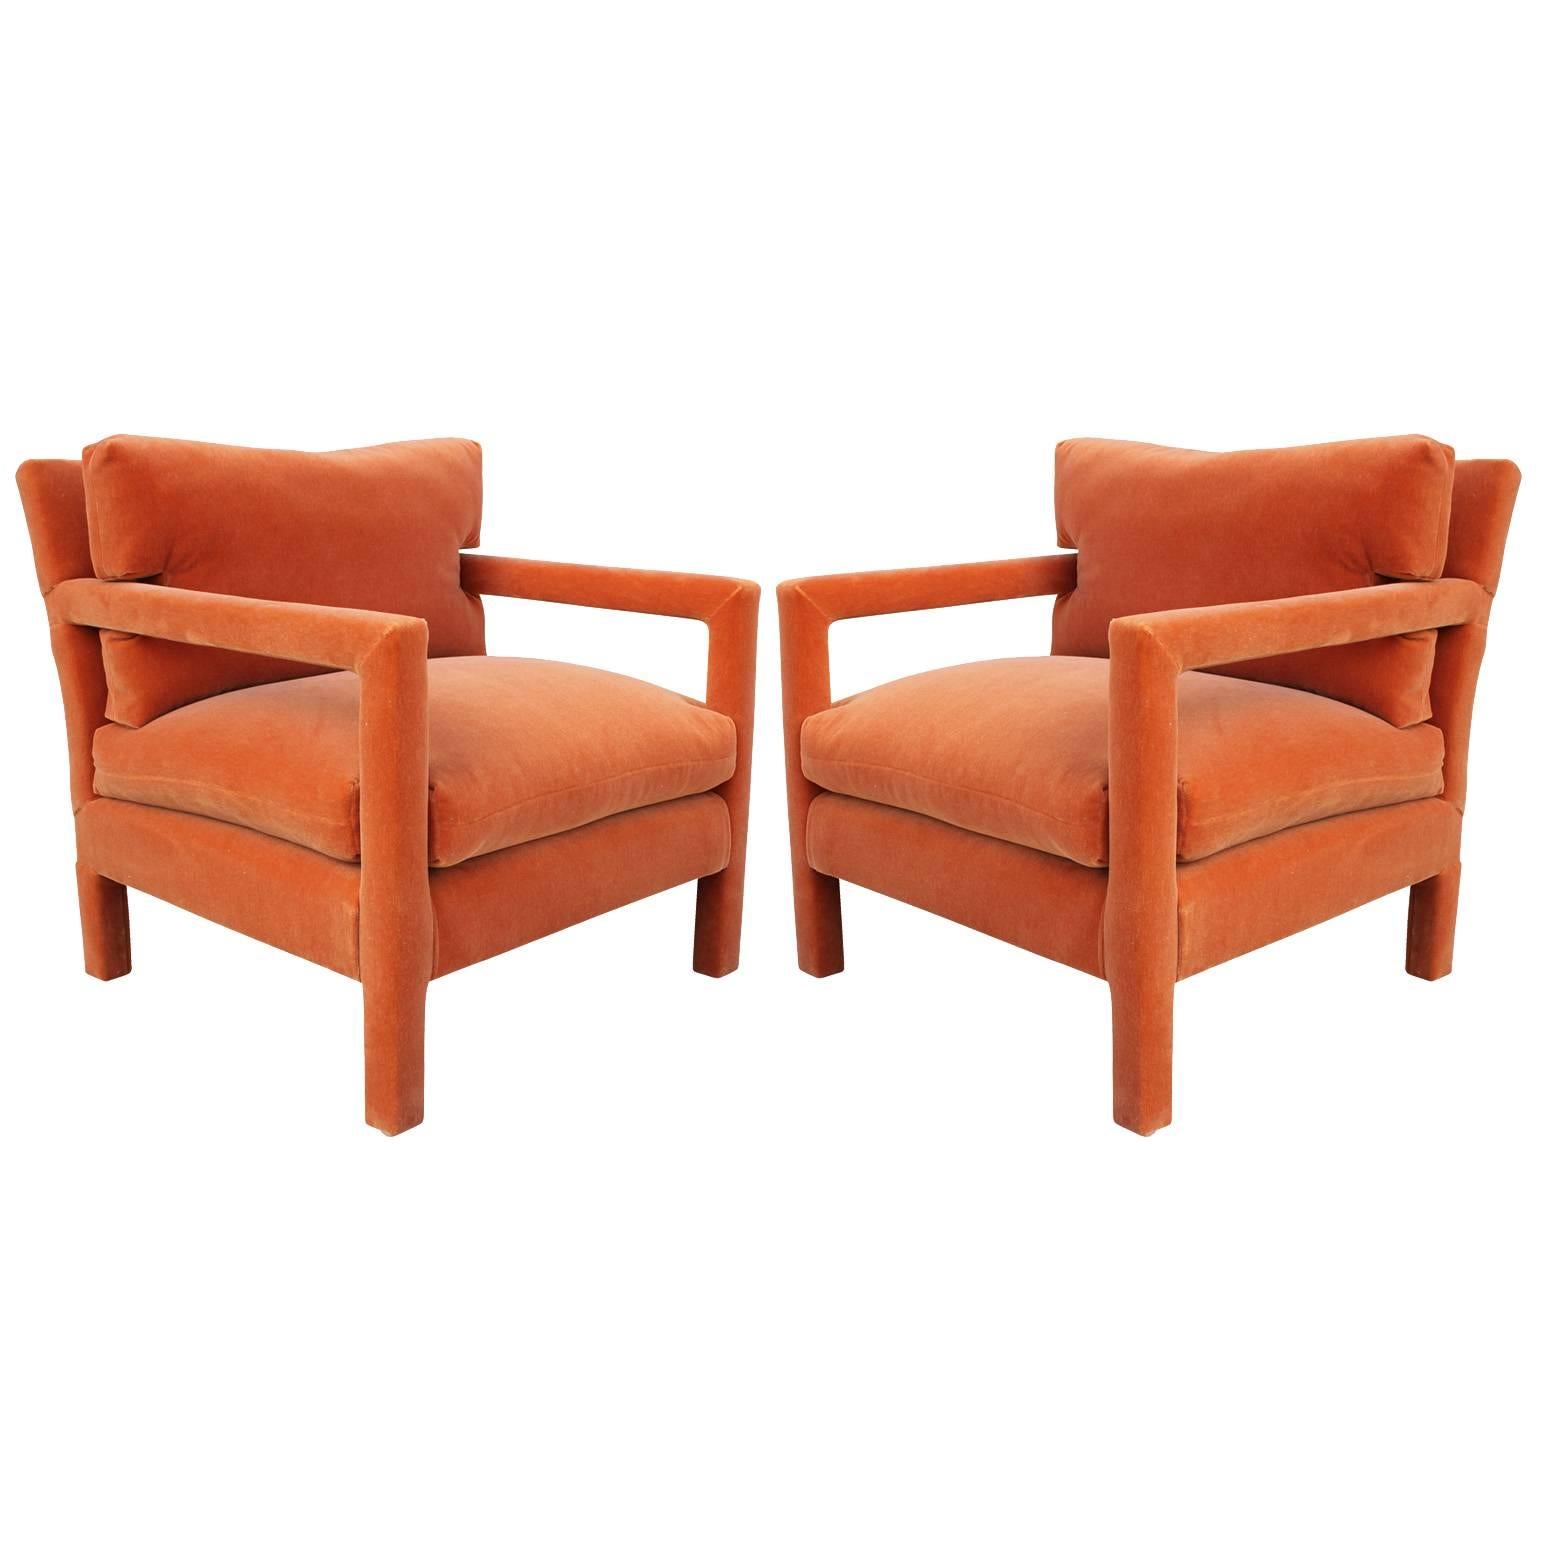 Fabulous Pair of Milo Baughman Parsons Style Chairs in Orange Mohair Velvet